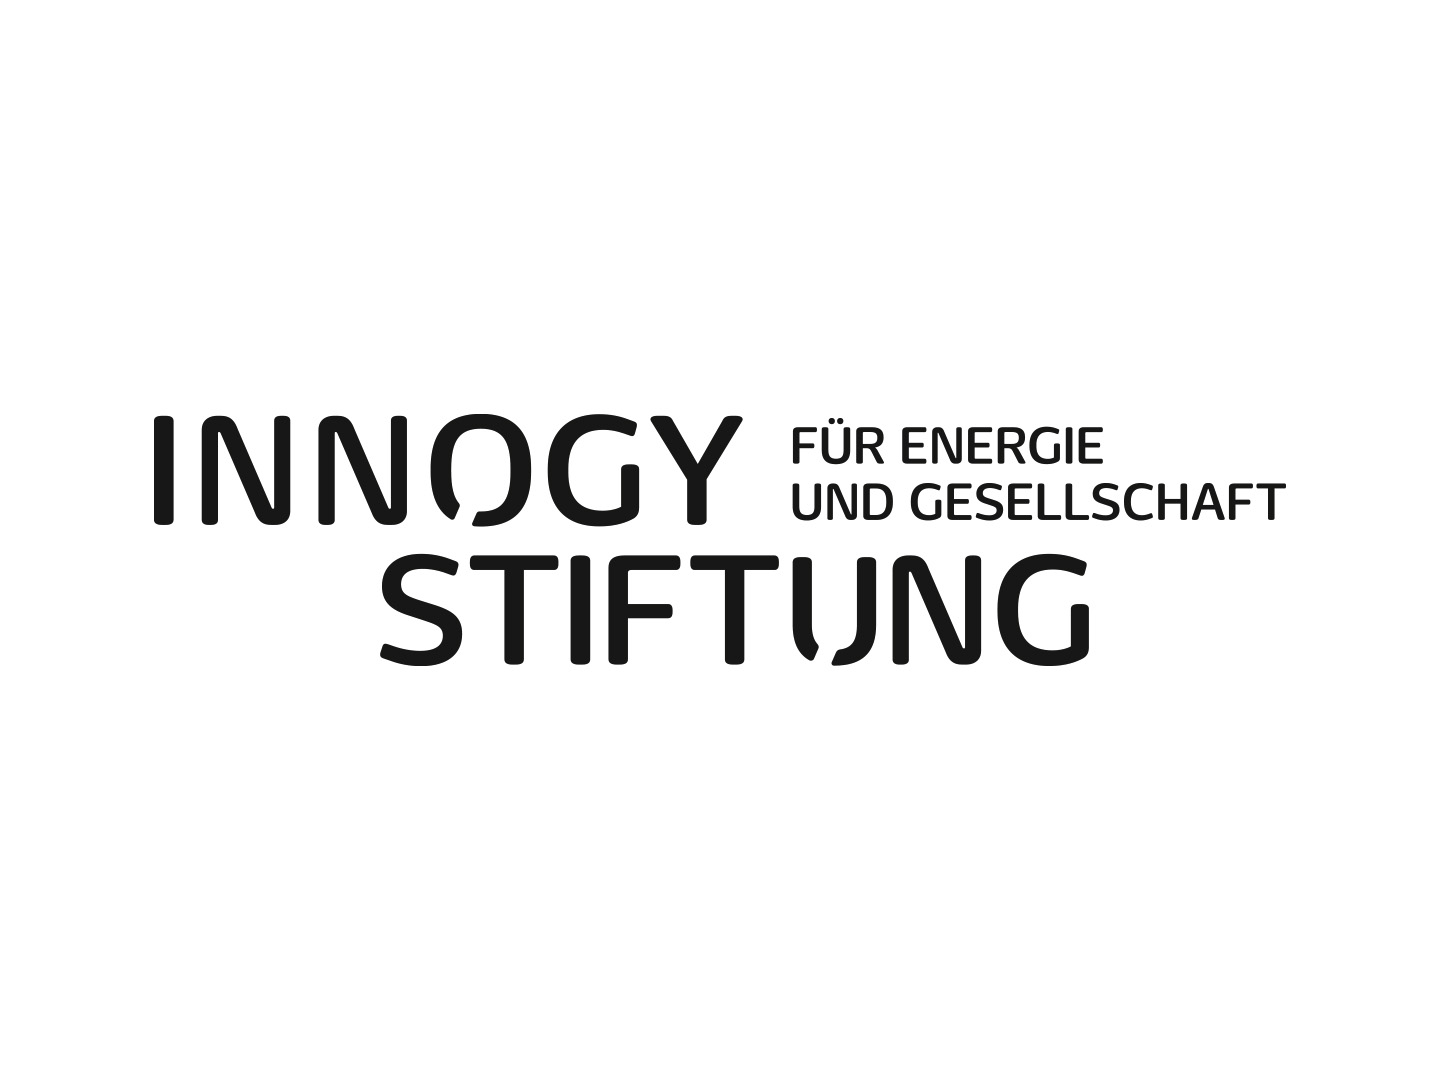 Innogy Stiftung